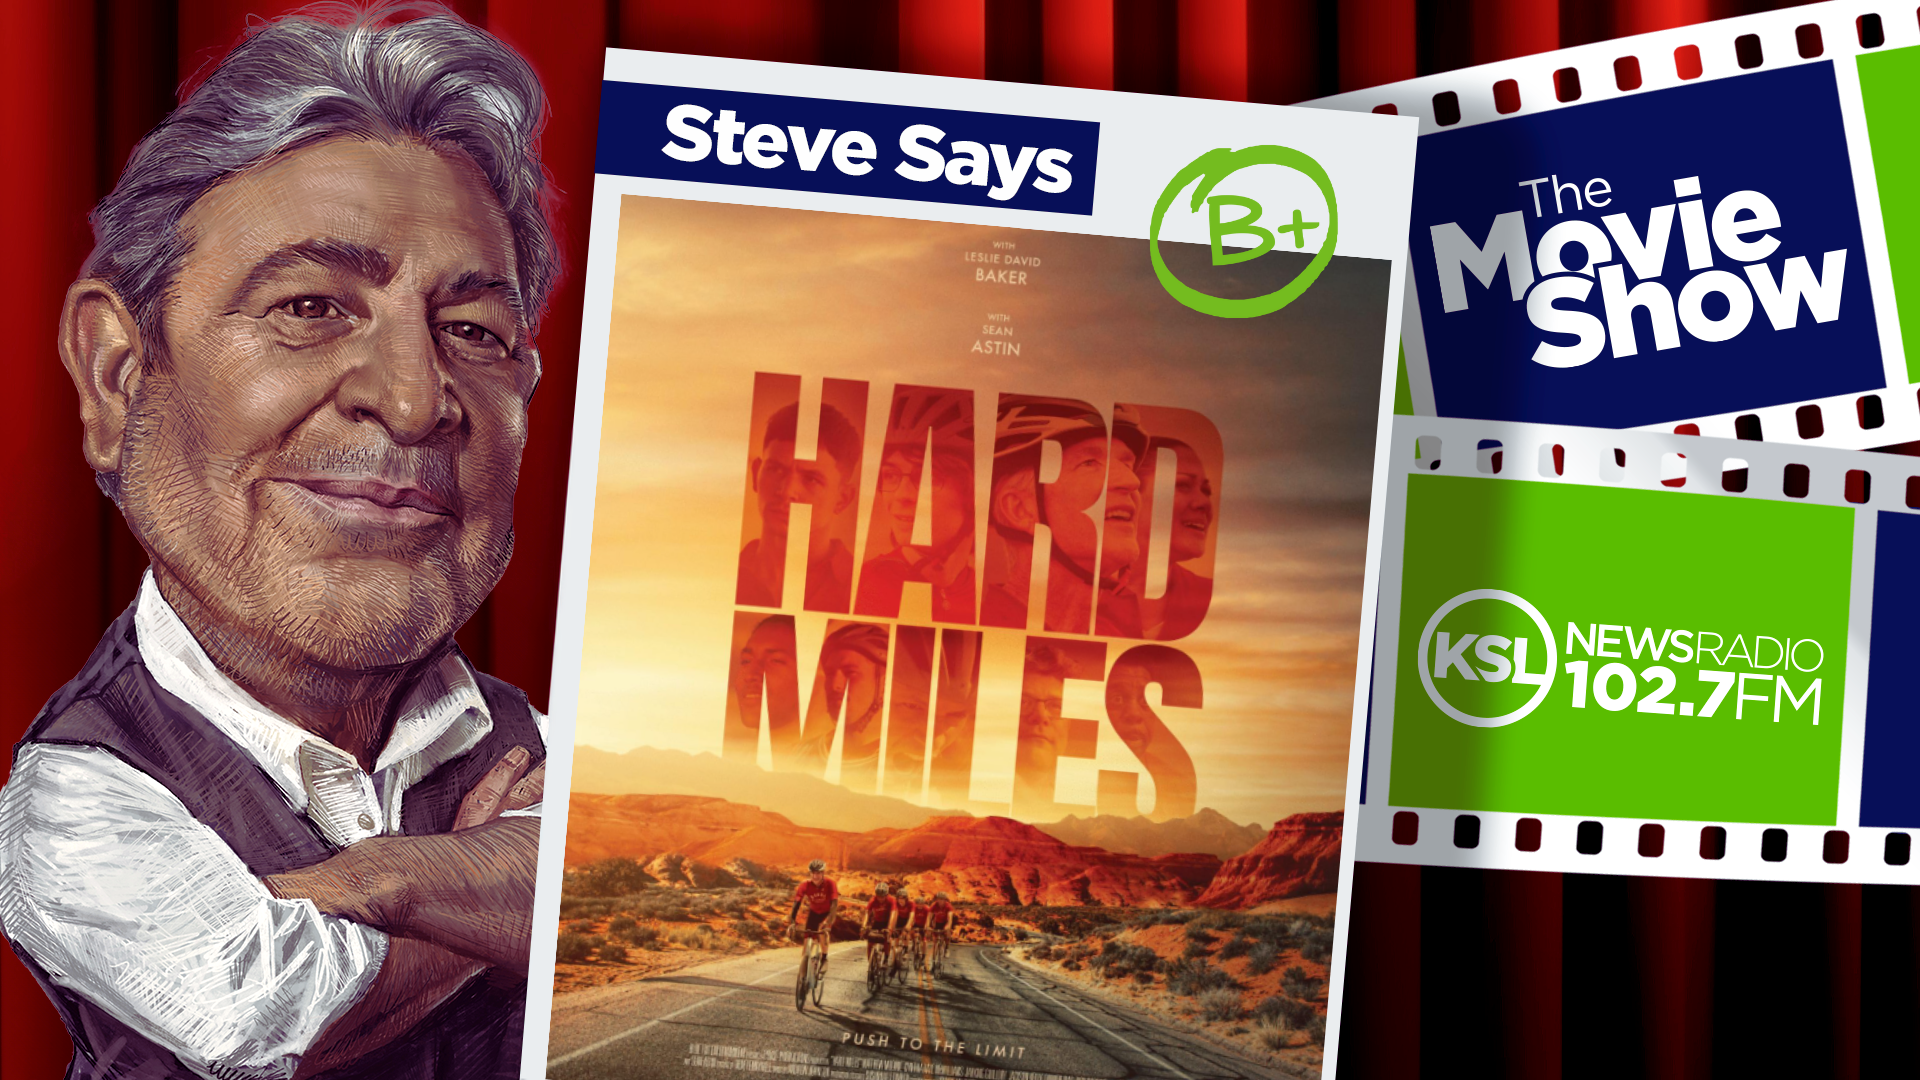 ksl movie show host steve salles stands next to hard miles poster...